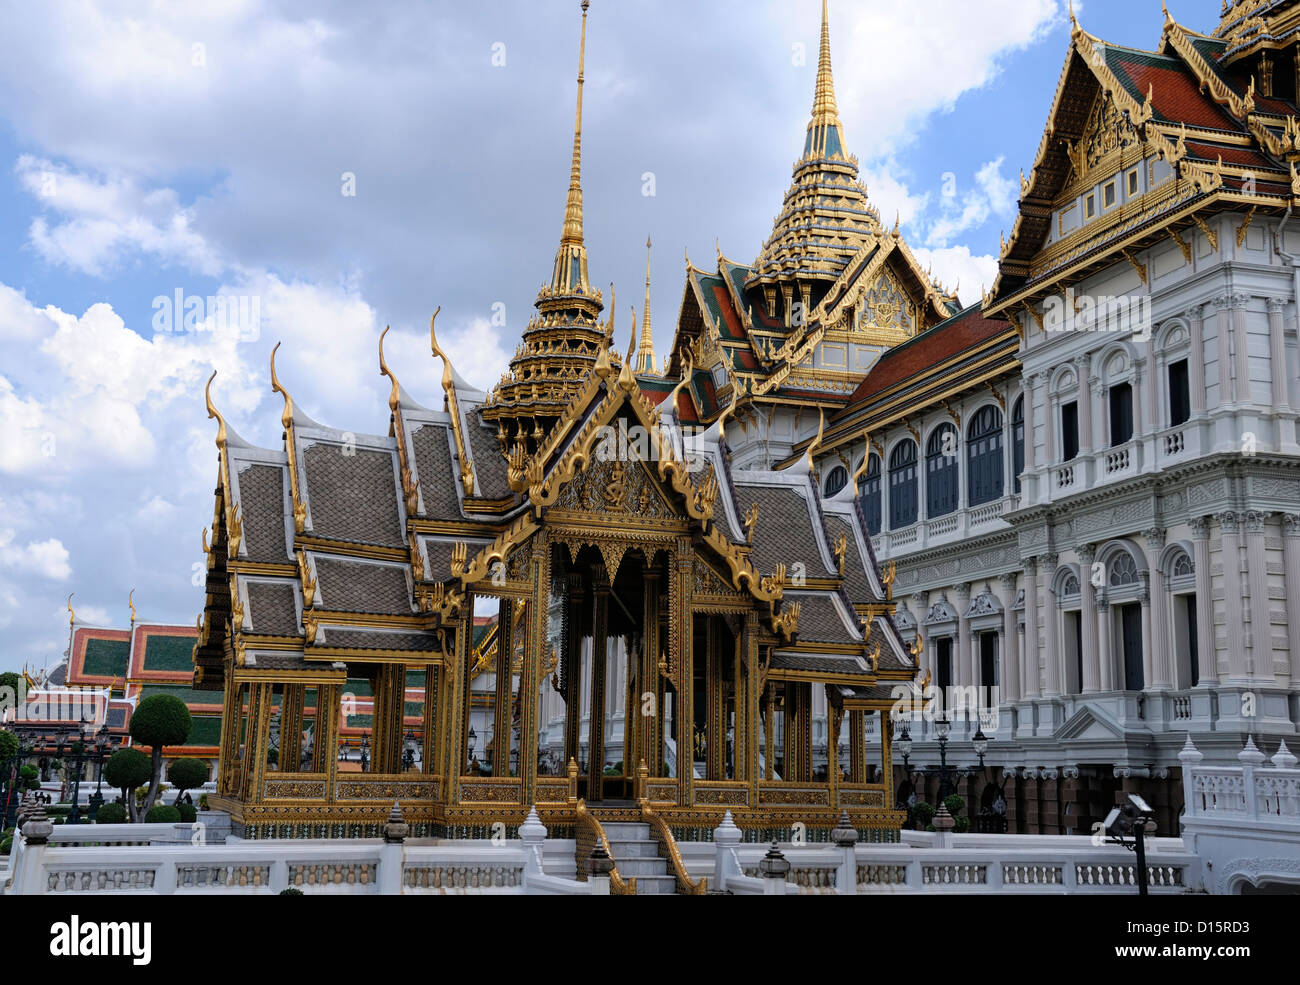 Grand Palace Bangkok Thailand Wat Phra Kaew Temple of the Emerald Buddha The Dusit Maha Prasat Throne Hall Stock Photo